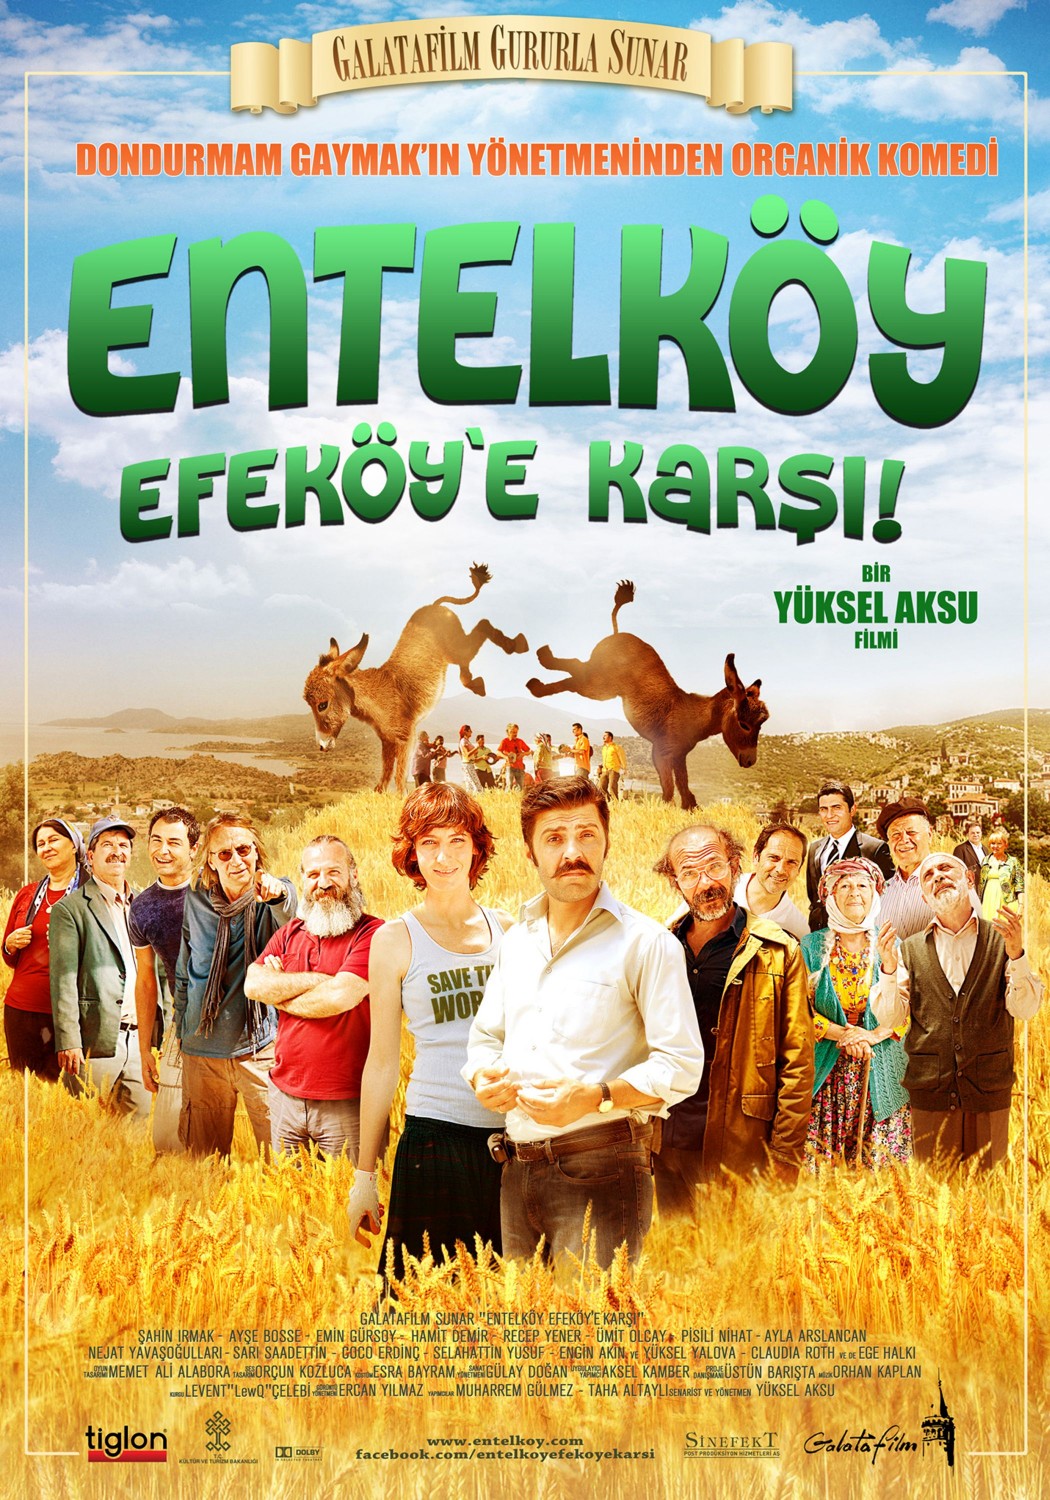 Extra Large Movie Poster Image for Entelköy Efeköy'e Karsi 